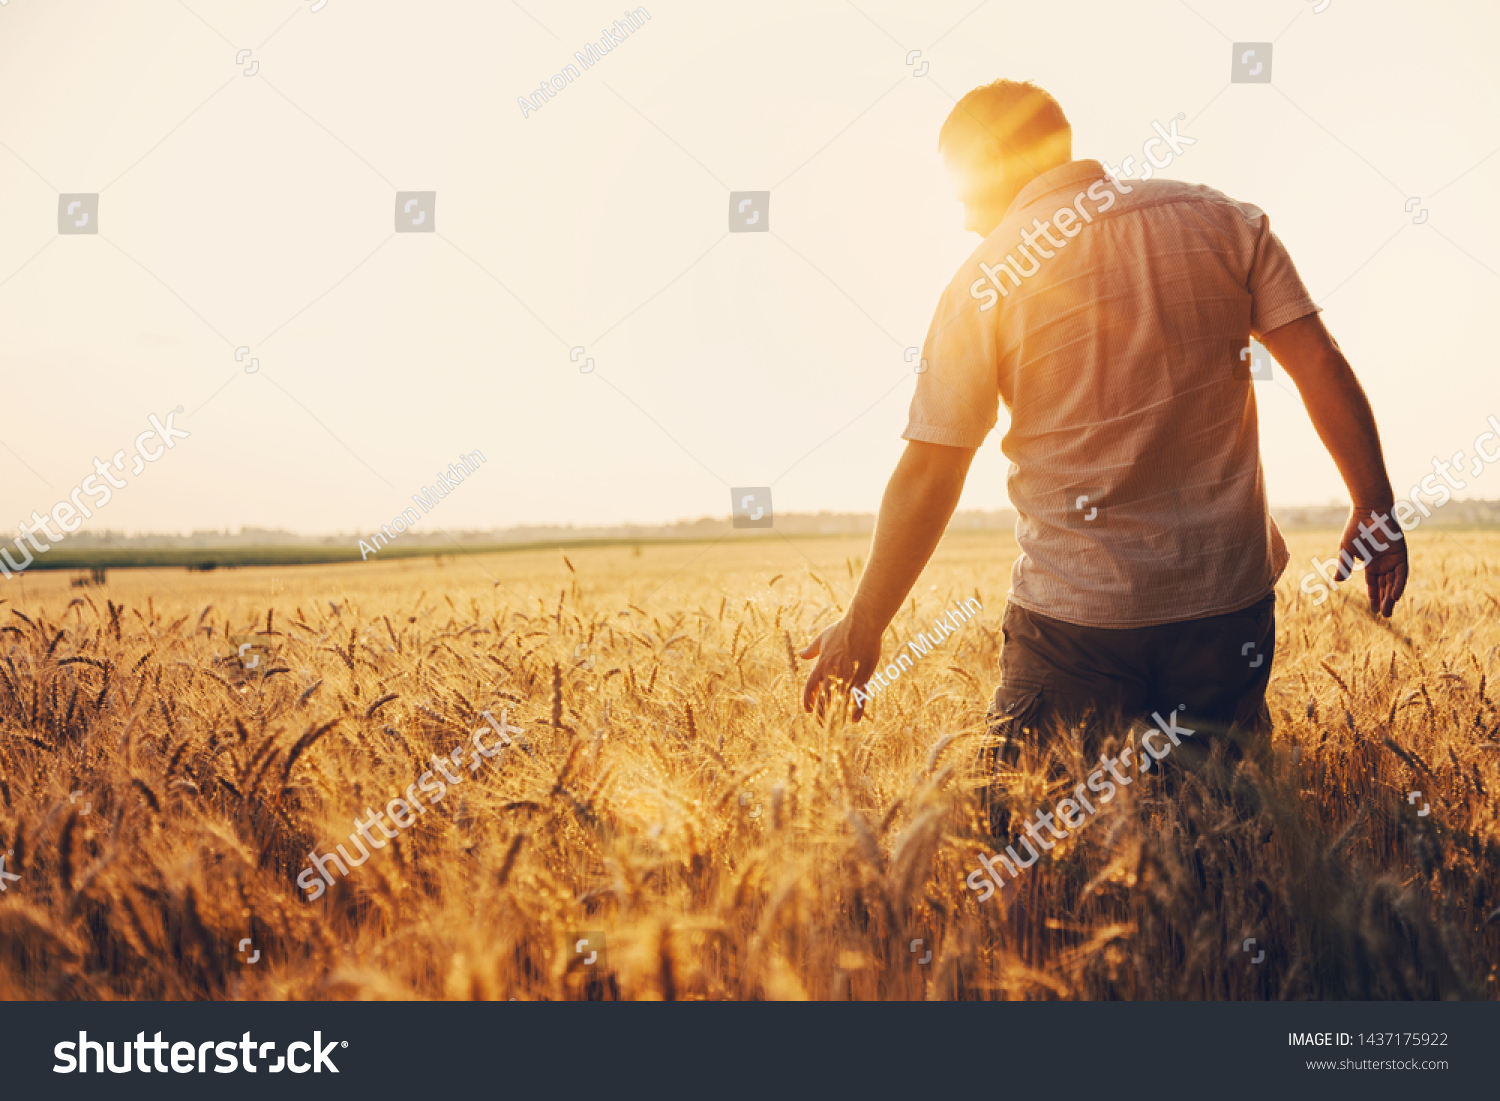 Silhouette of Man agronomist farmer in golden wheat field. Male holds ears of wheat in hand. #1437175922